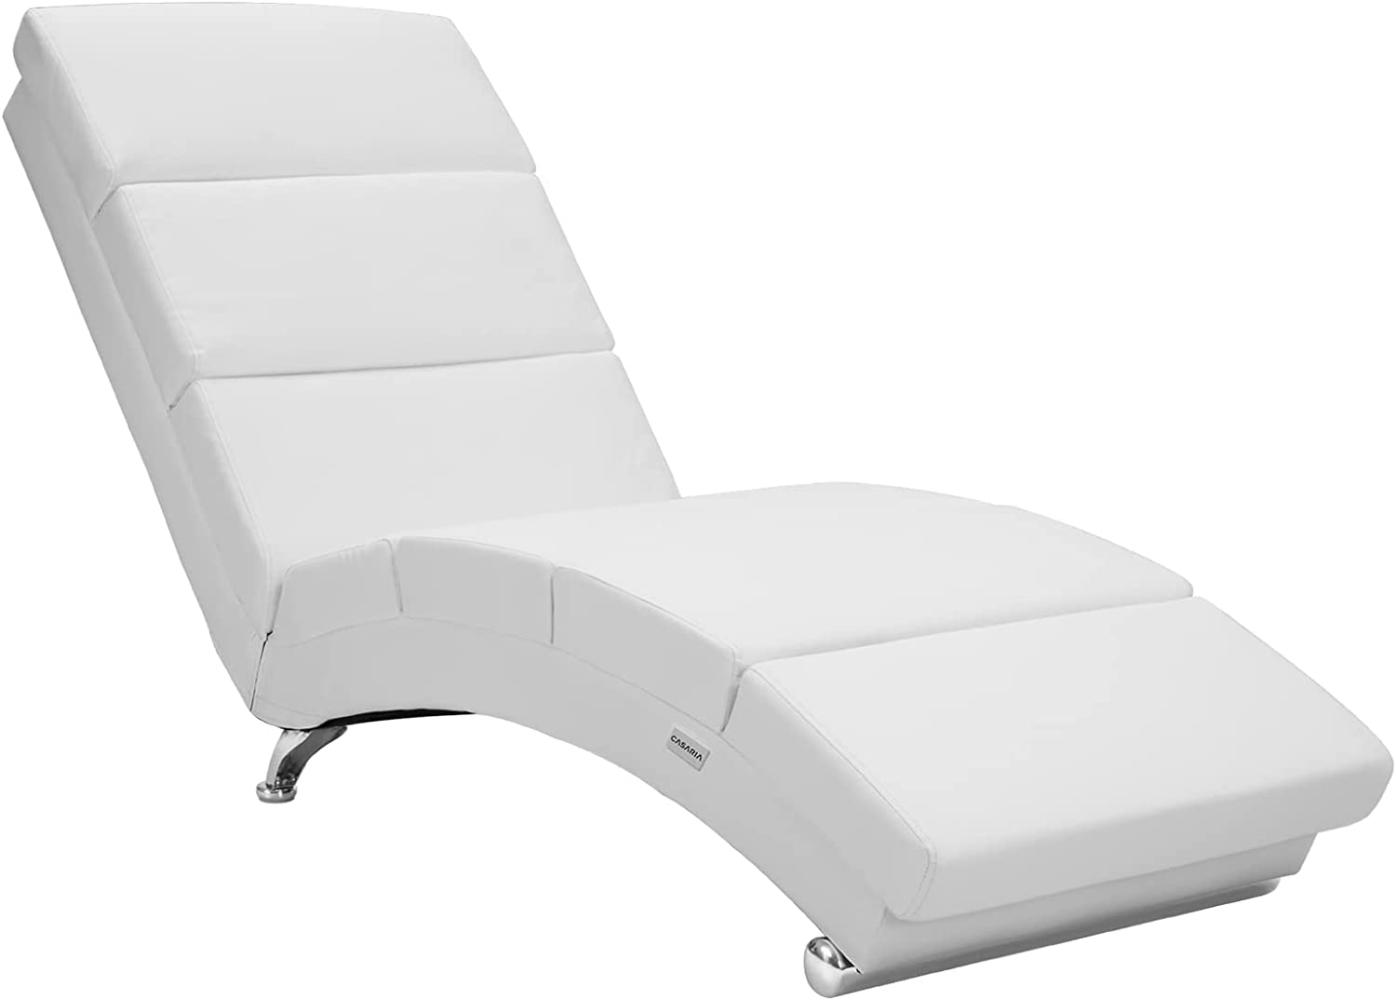 Casaria Relaxliege XXL London Ergonomisch hohe Rückenlehne 186cm Relaxsessel Loungesessel Chaiselongue Kunstleder Weiß Bild 1